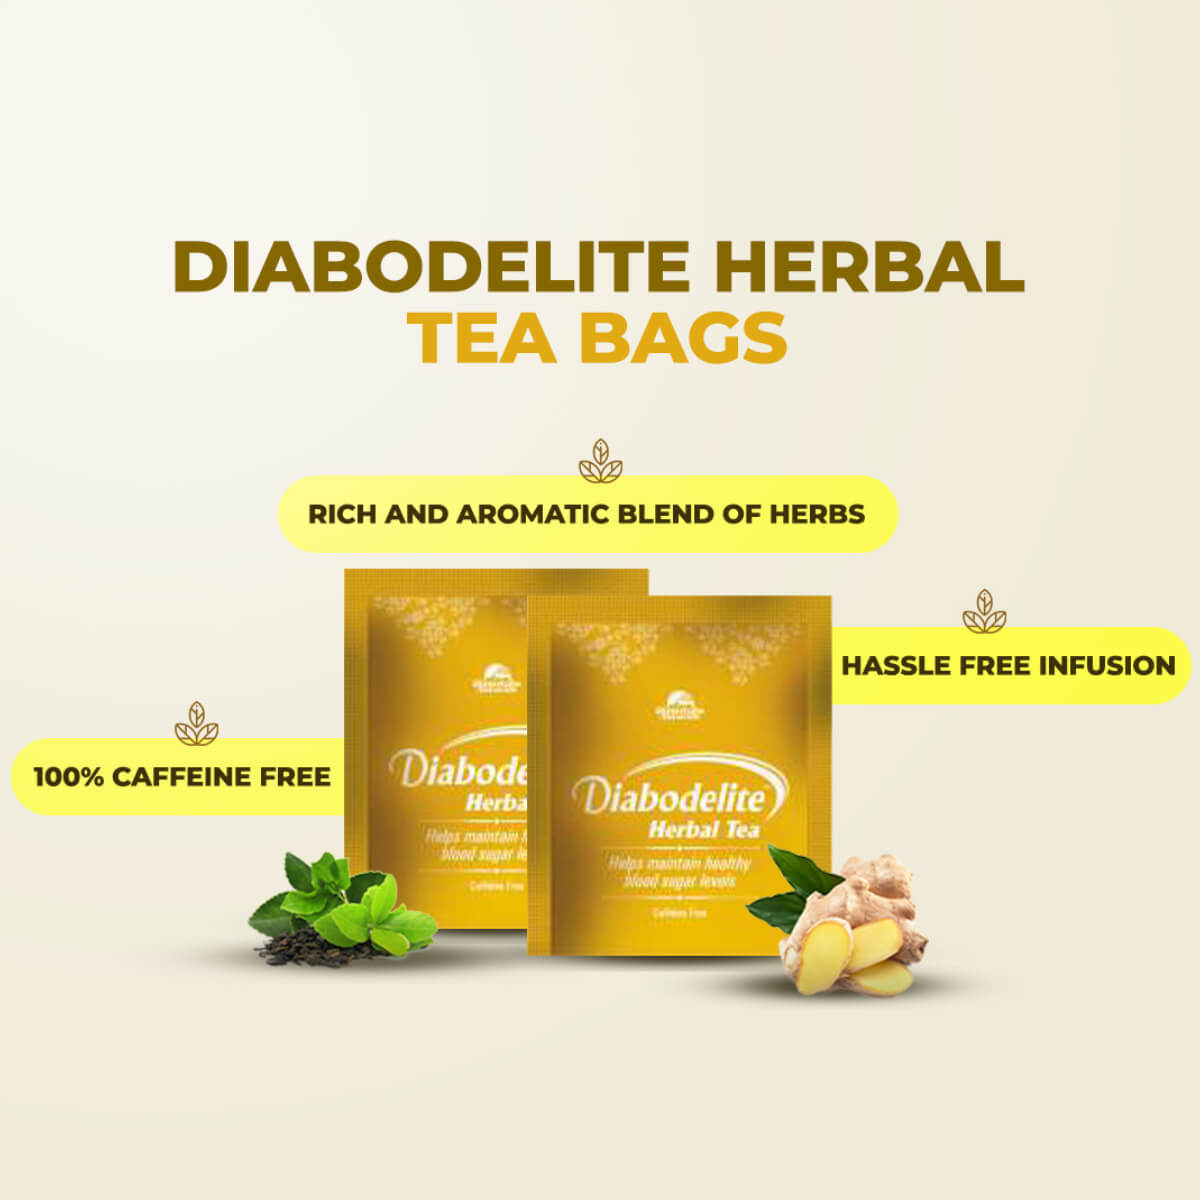 Diabodelite Tea